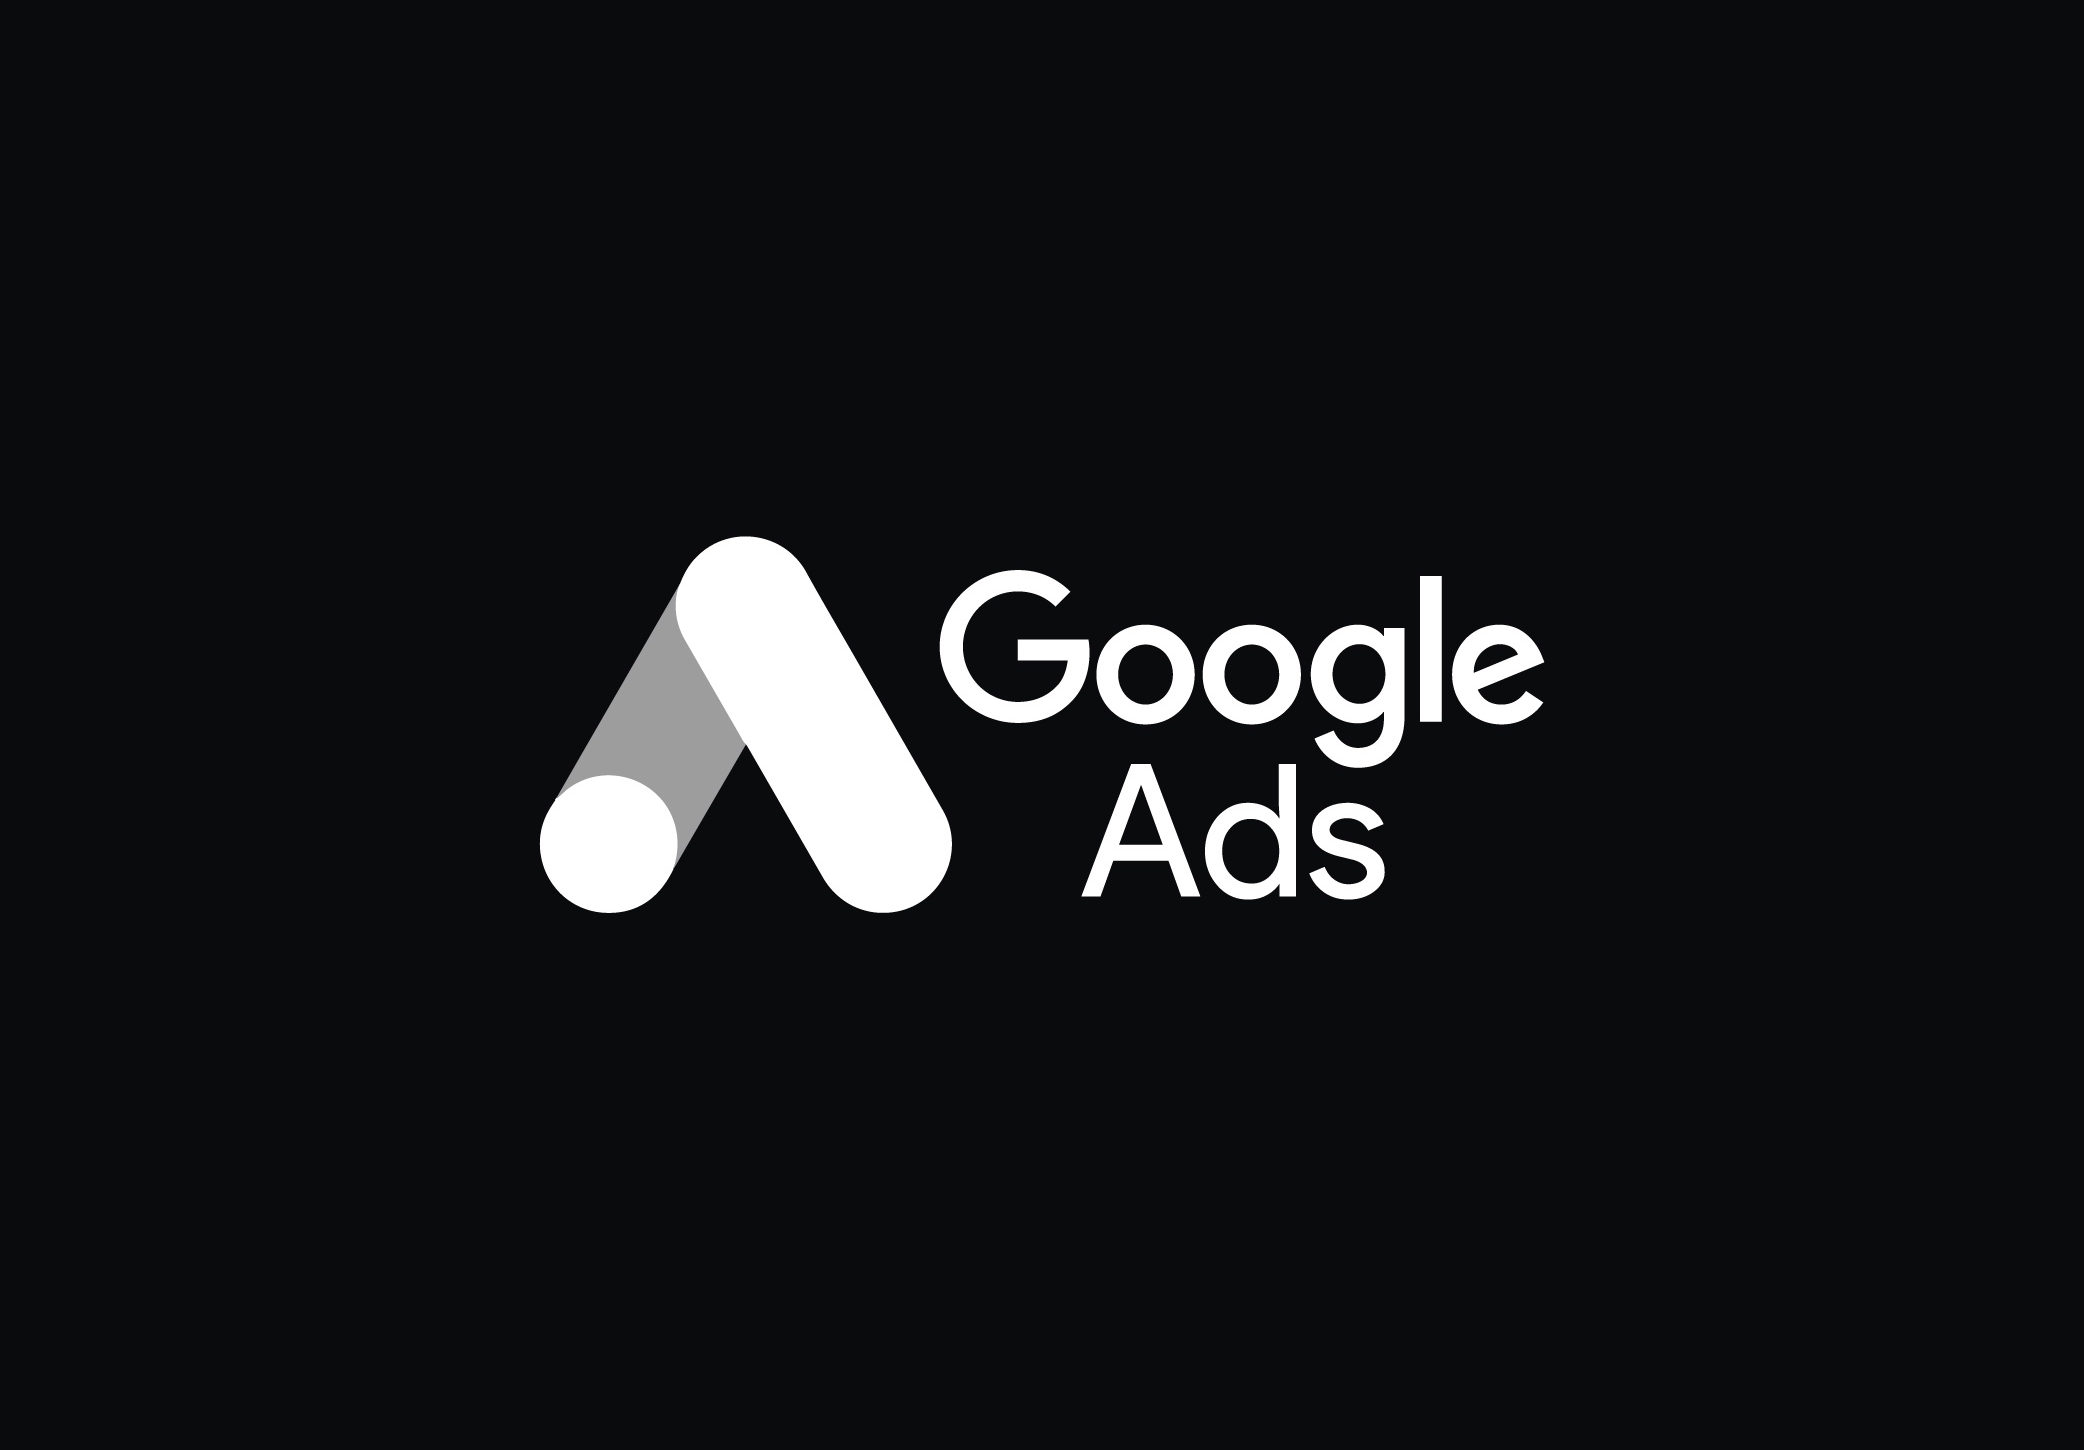 Google-Ads-aspect-ratio-670-466